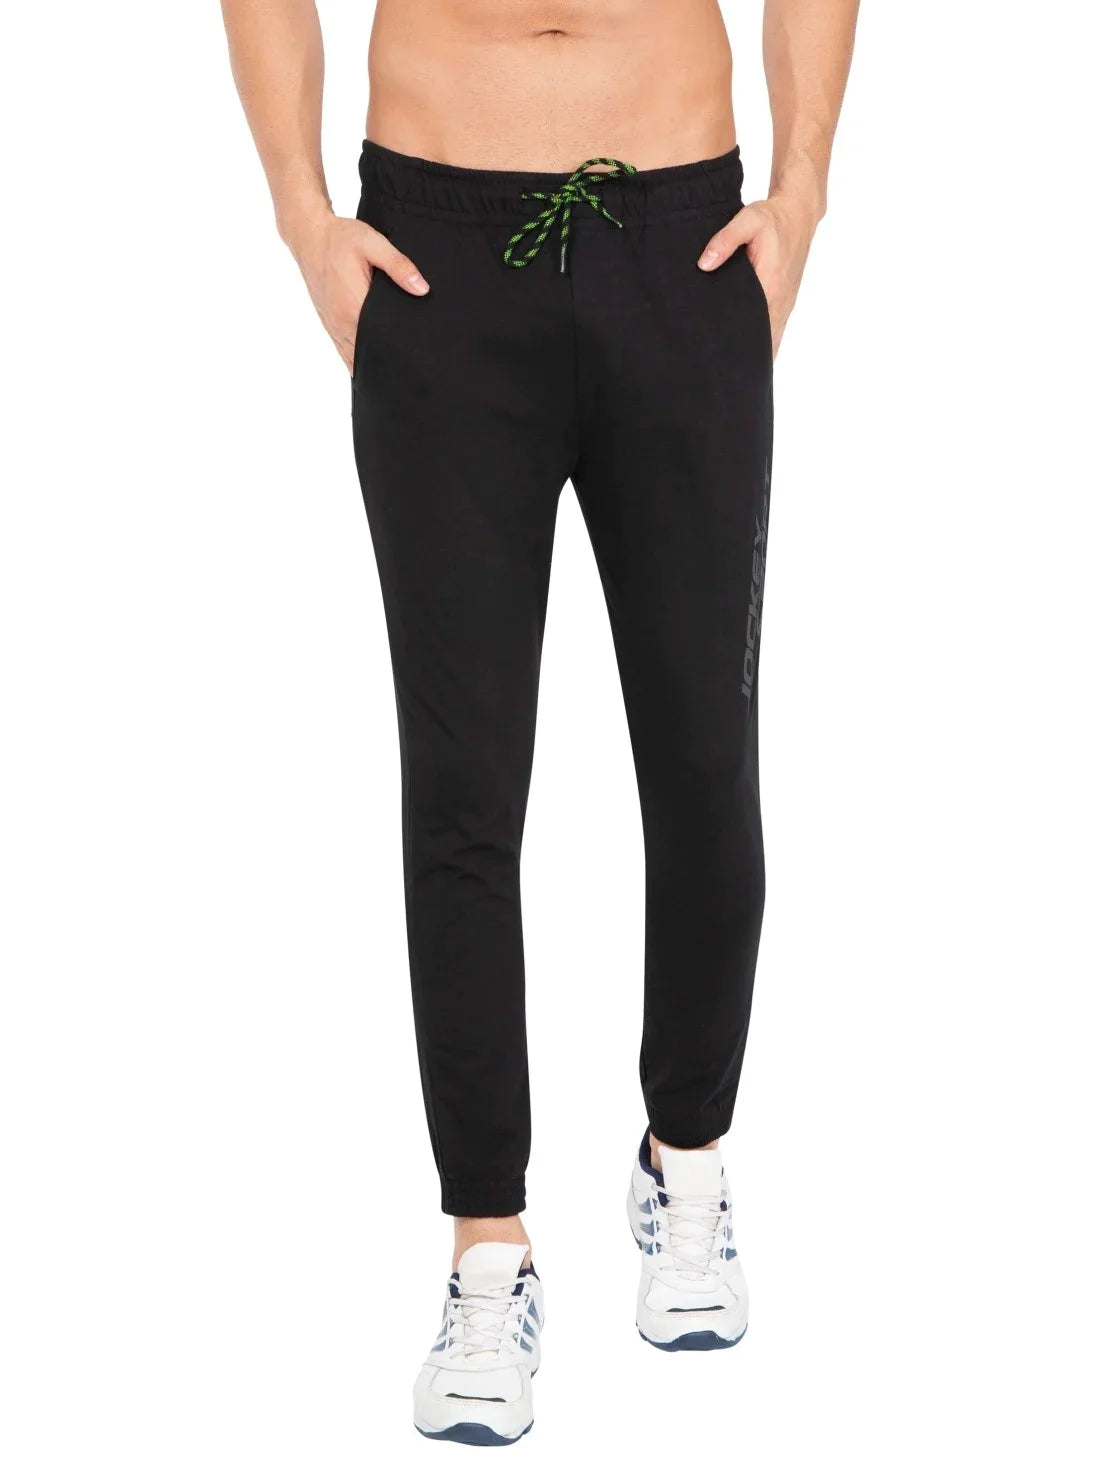 Buy JOCKEY Womens Floral Print Track Pants | Shoppers Stop